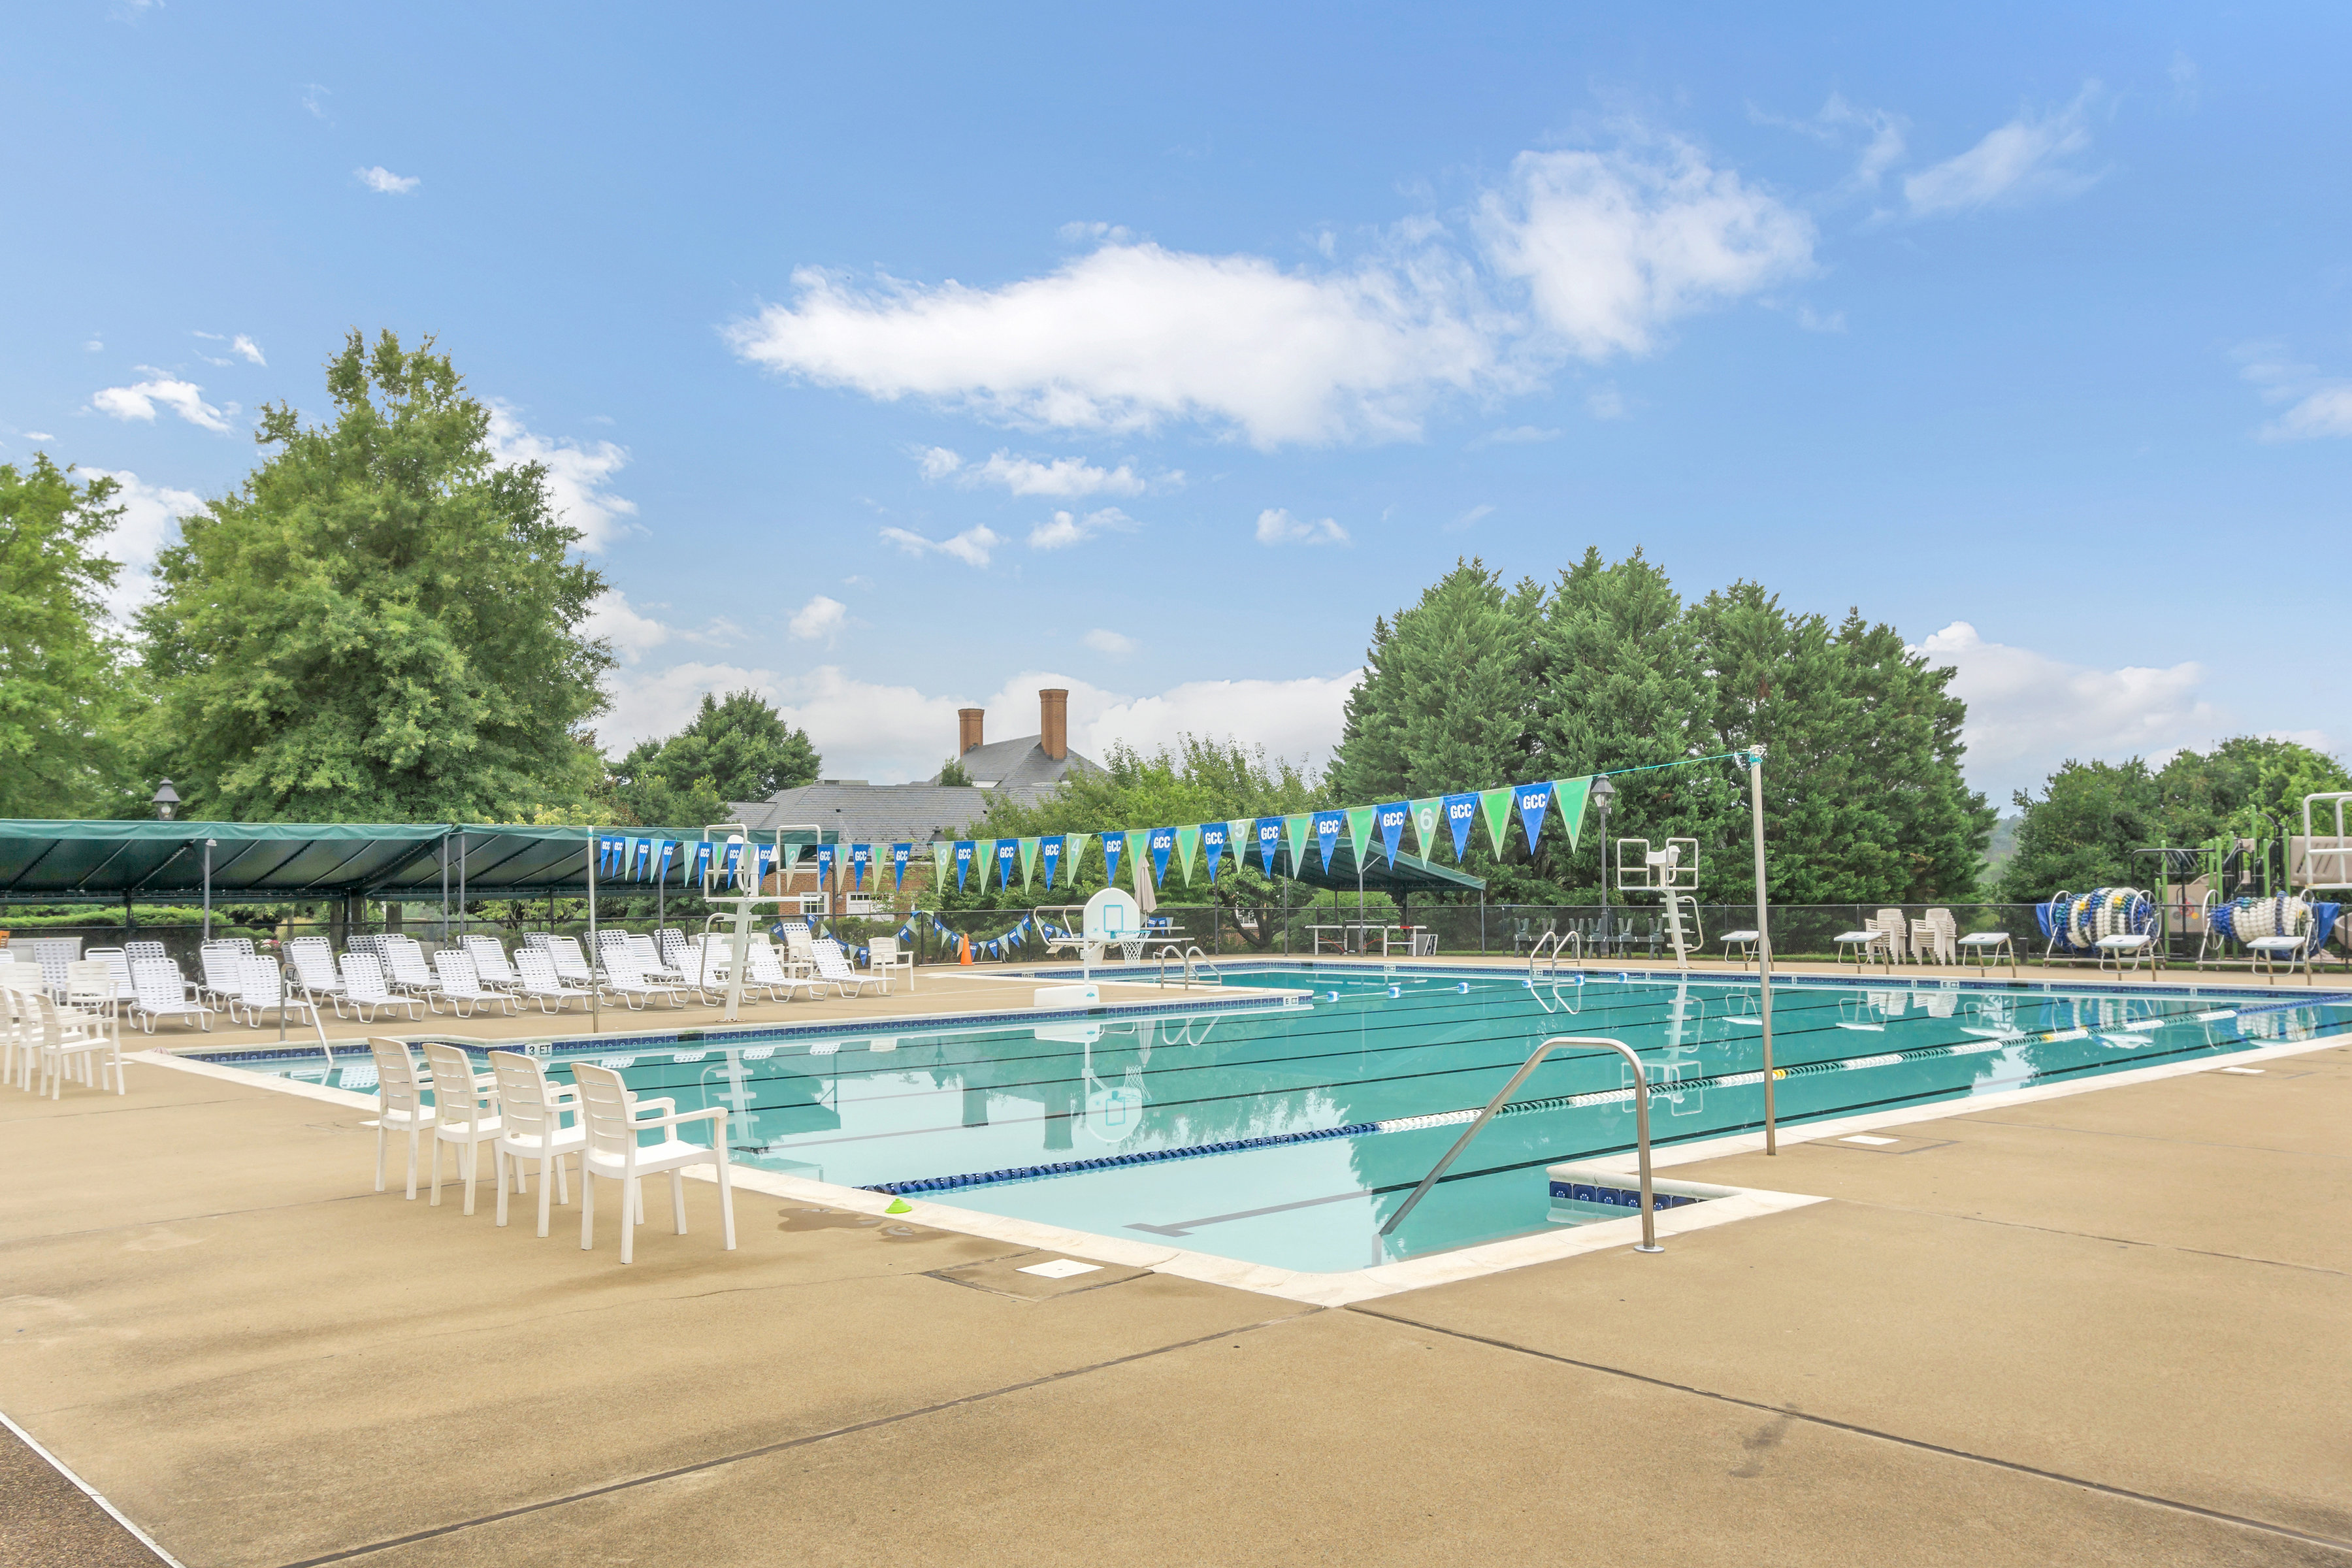 Glenmore swimming pool with swim lanes